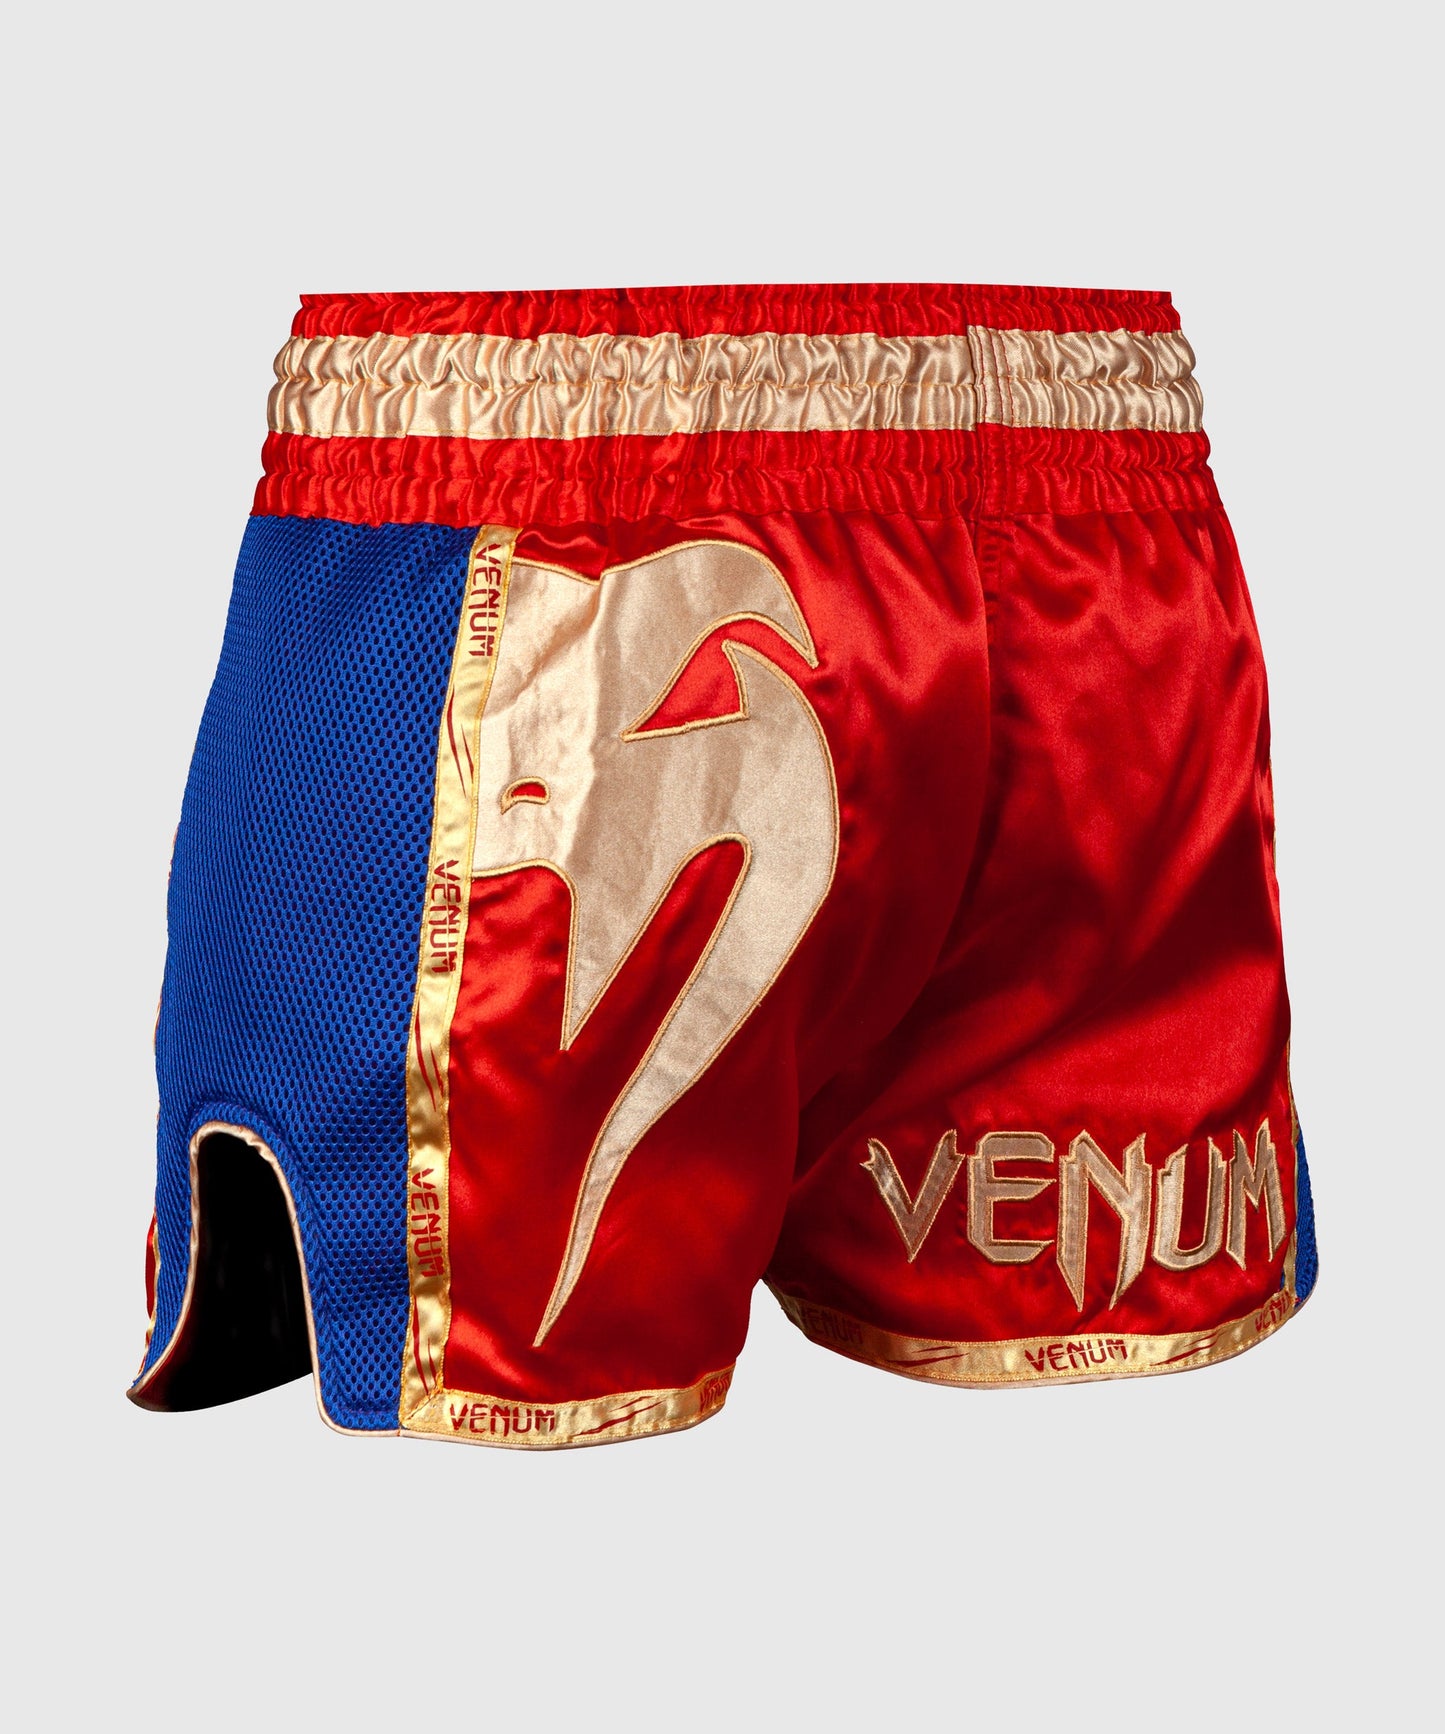 Venum Giant Muay Thai Shorts - Red/Gold